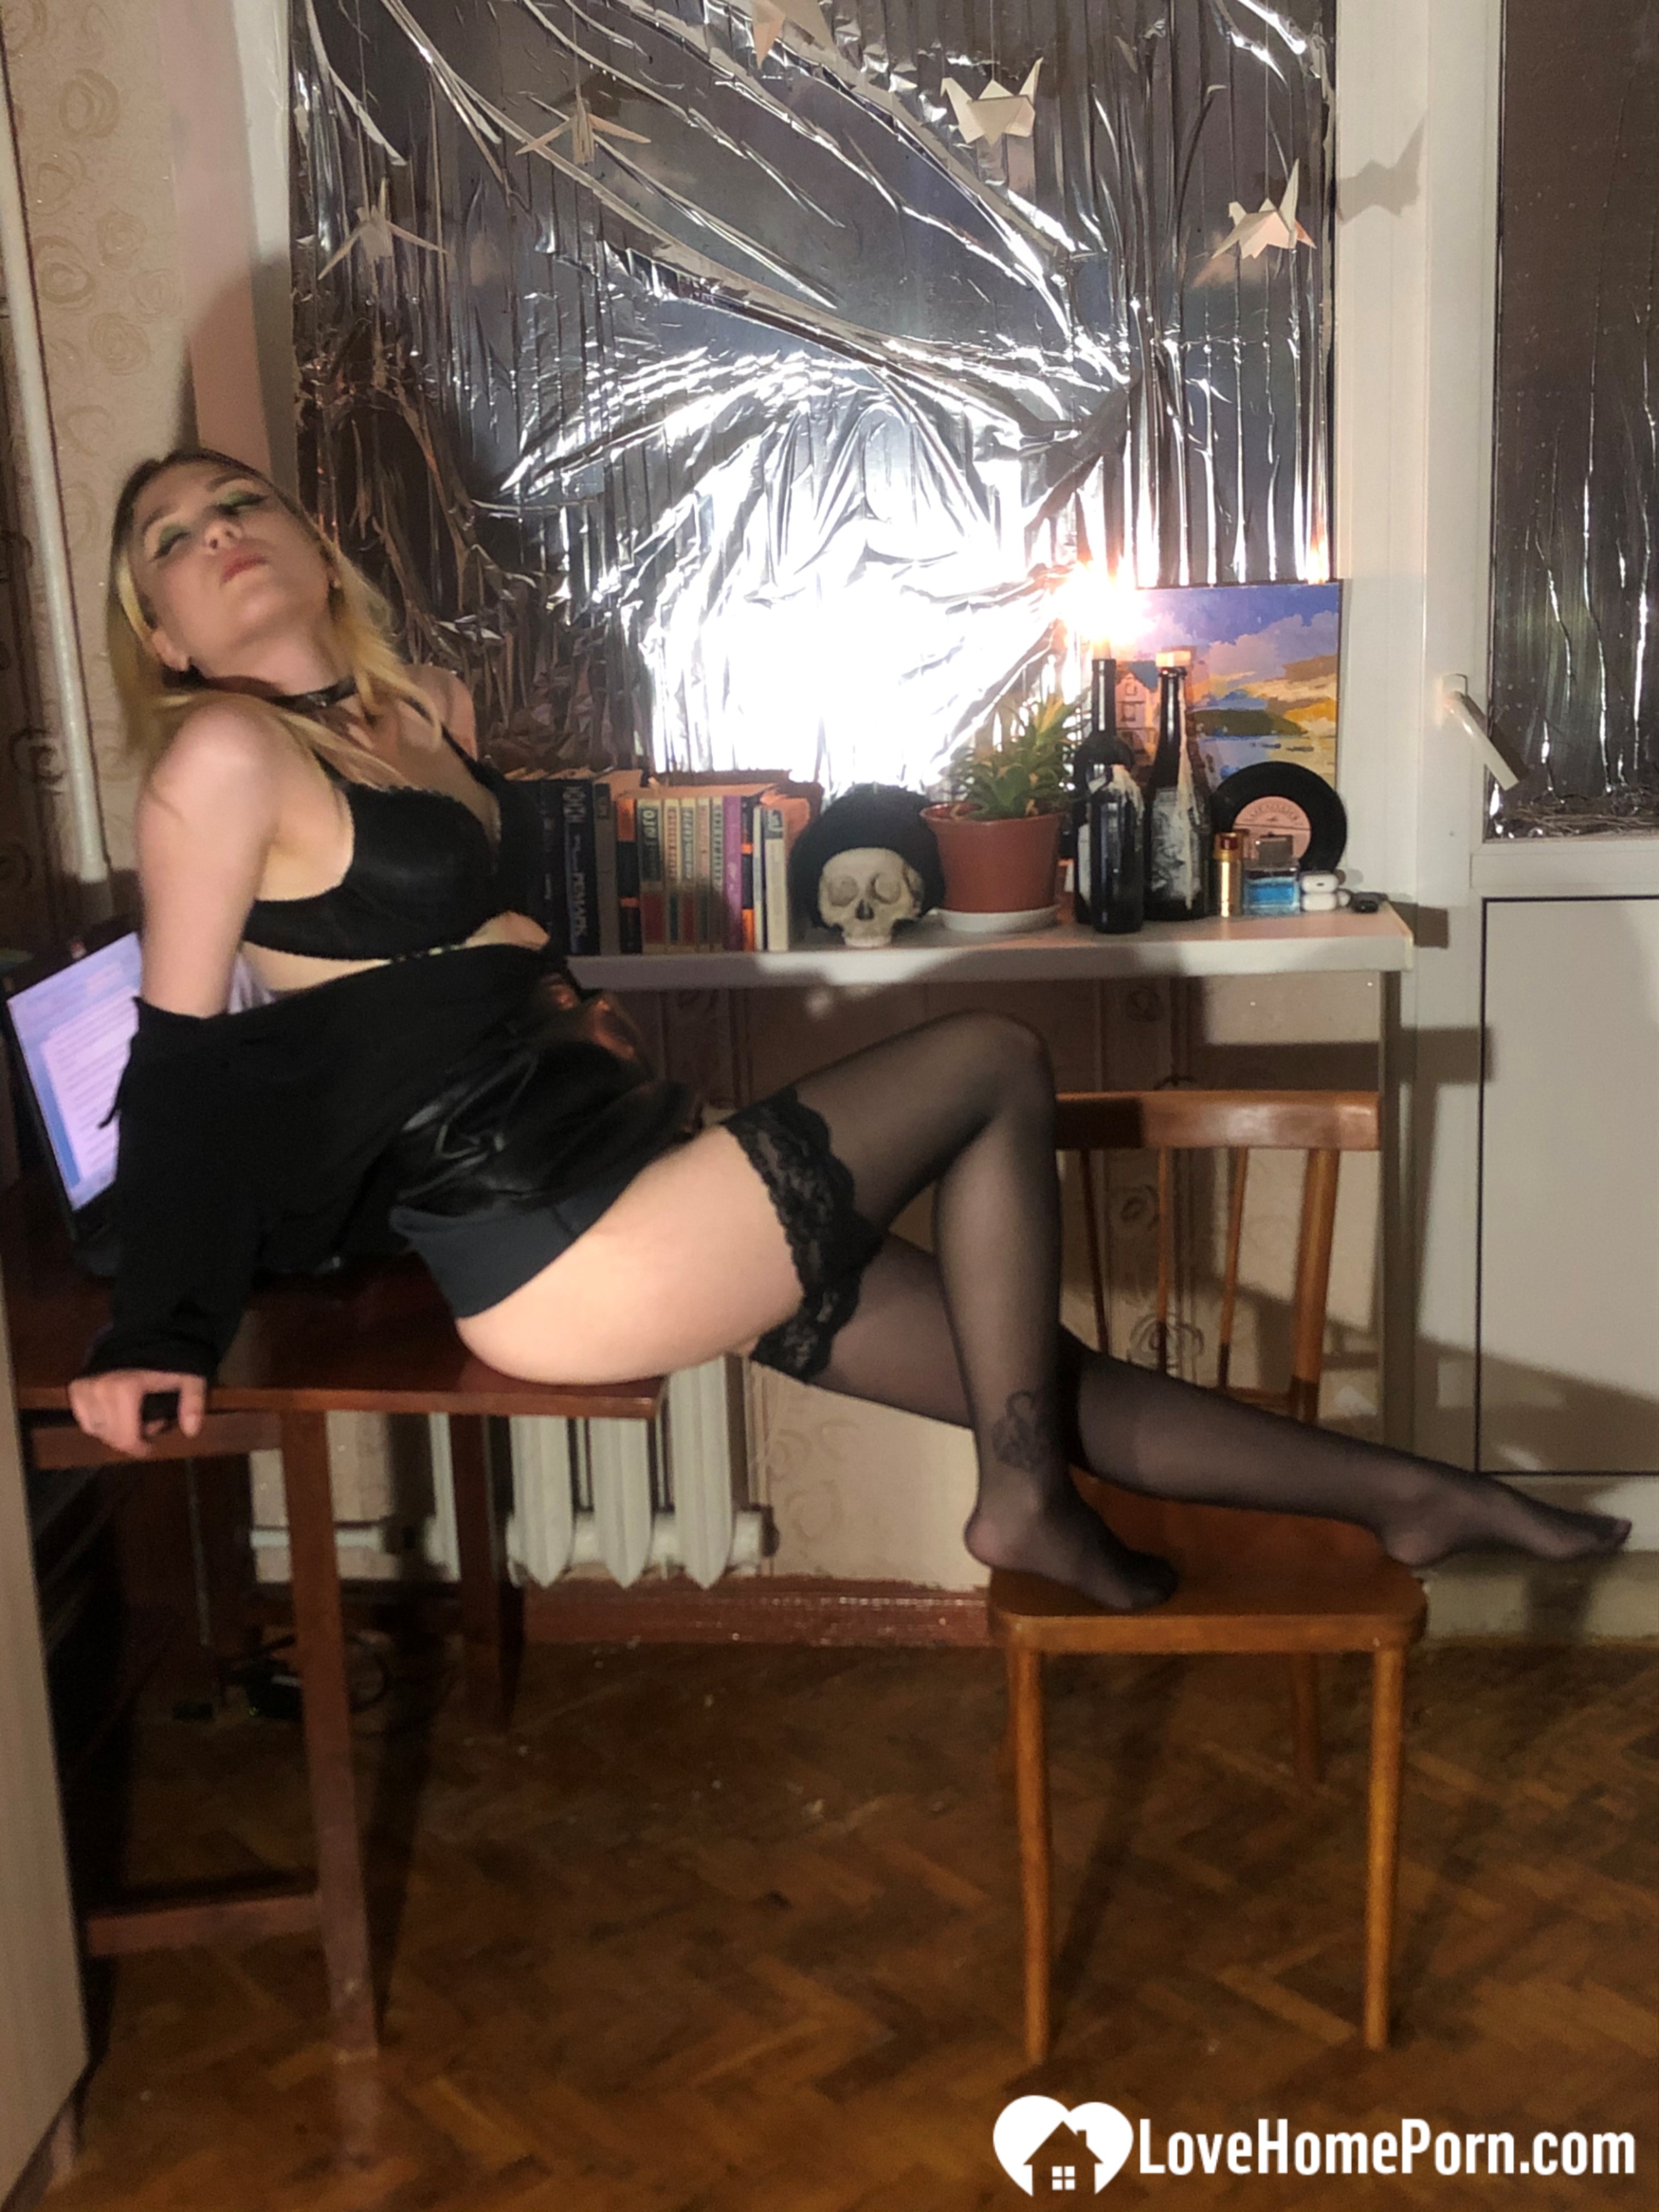 Hot blonde in stockings strips her lingerie